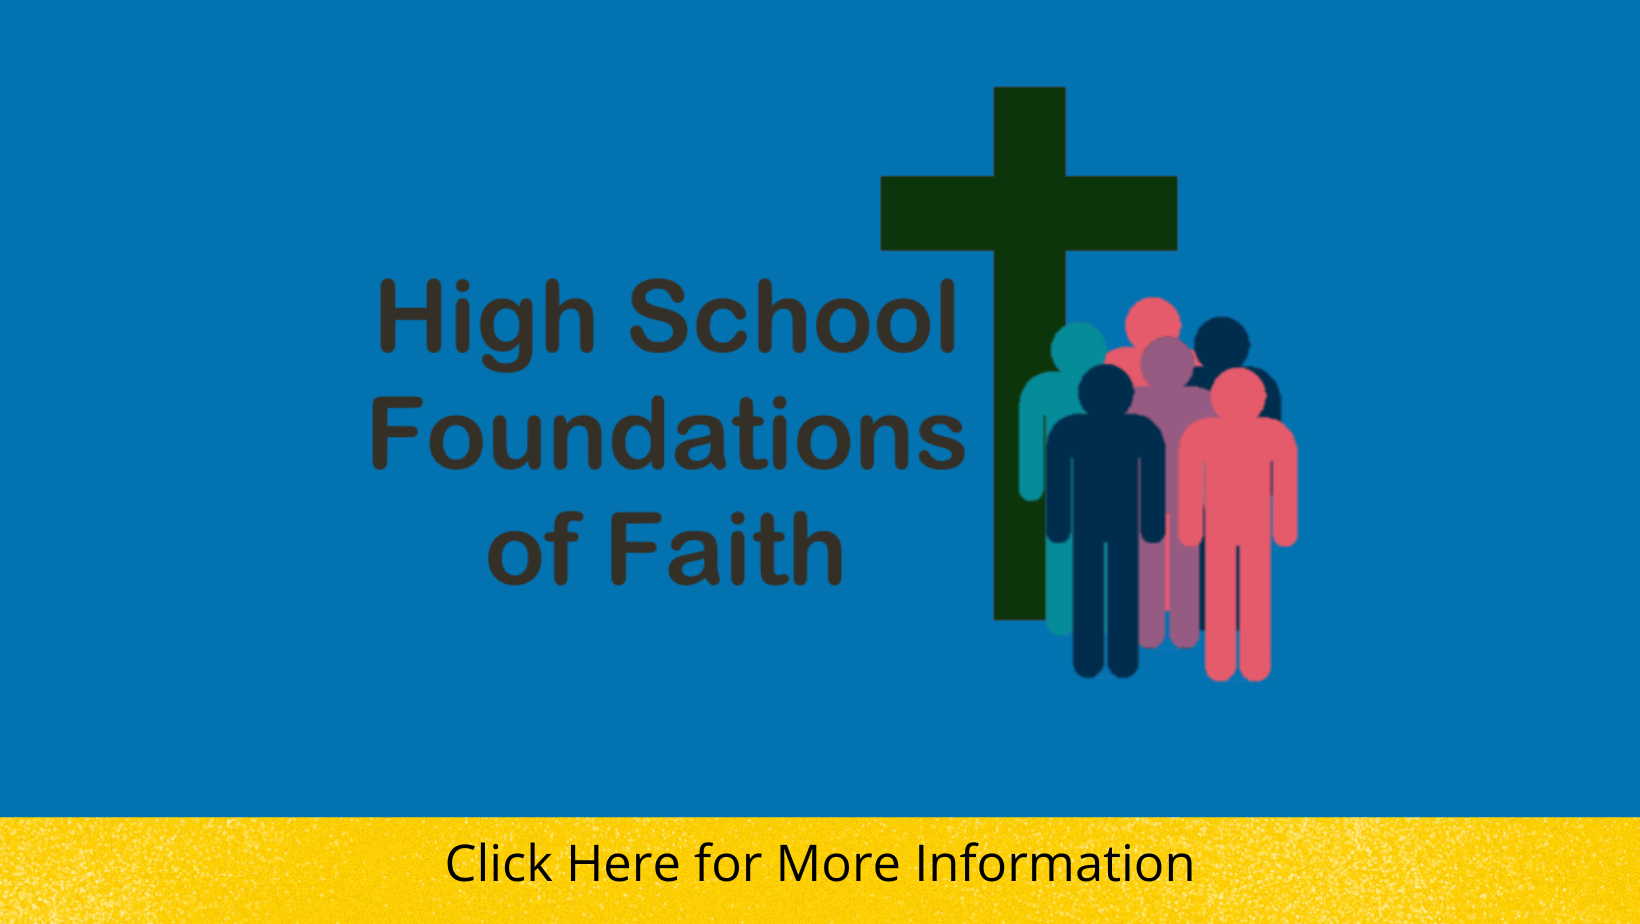 High School Foundations of Faith homepage tile